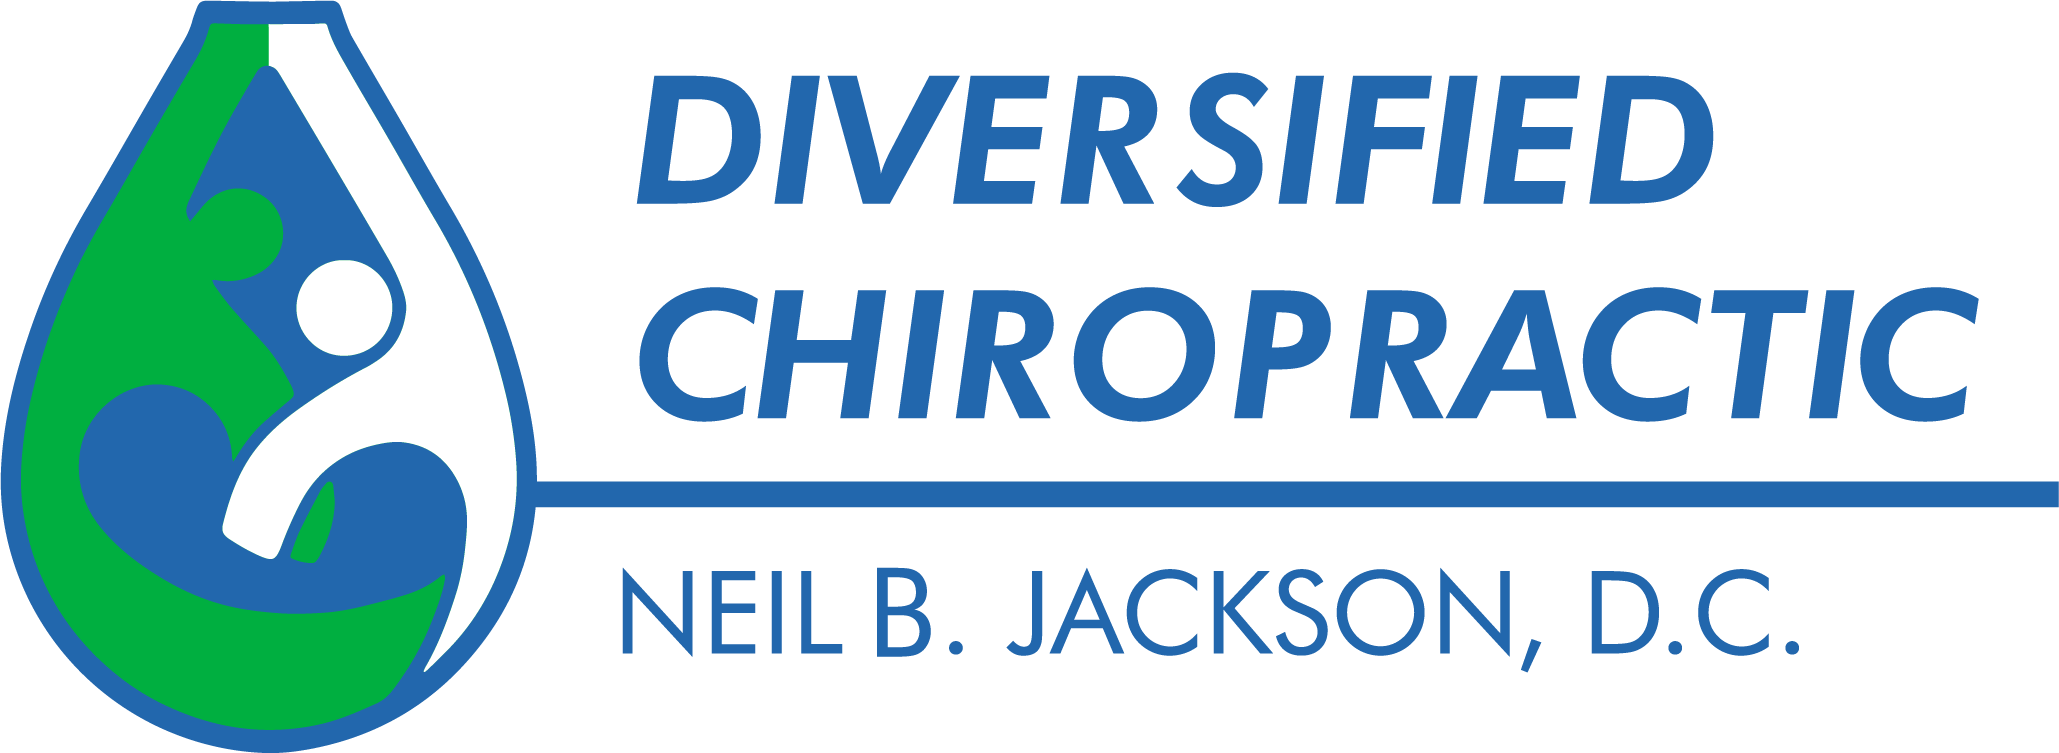 Diversified Chiropractic